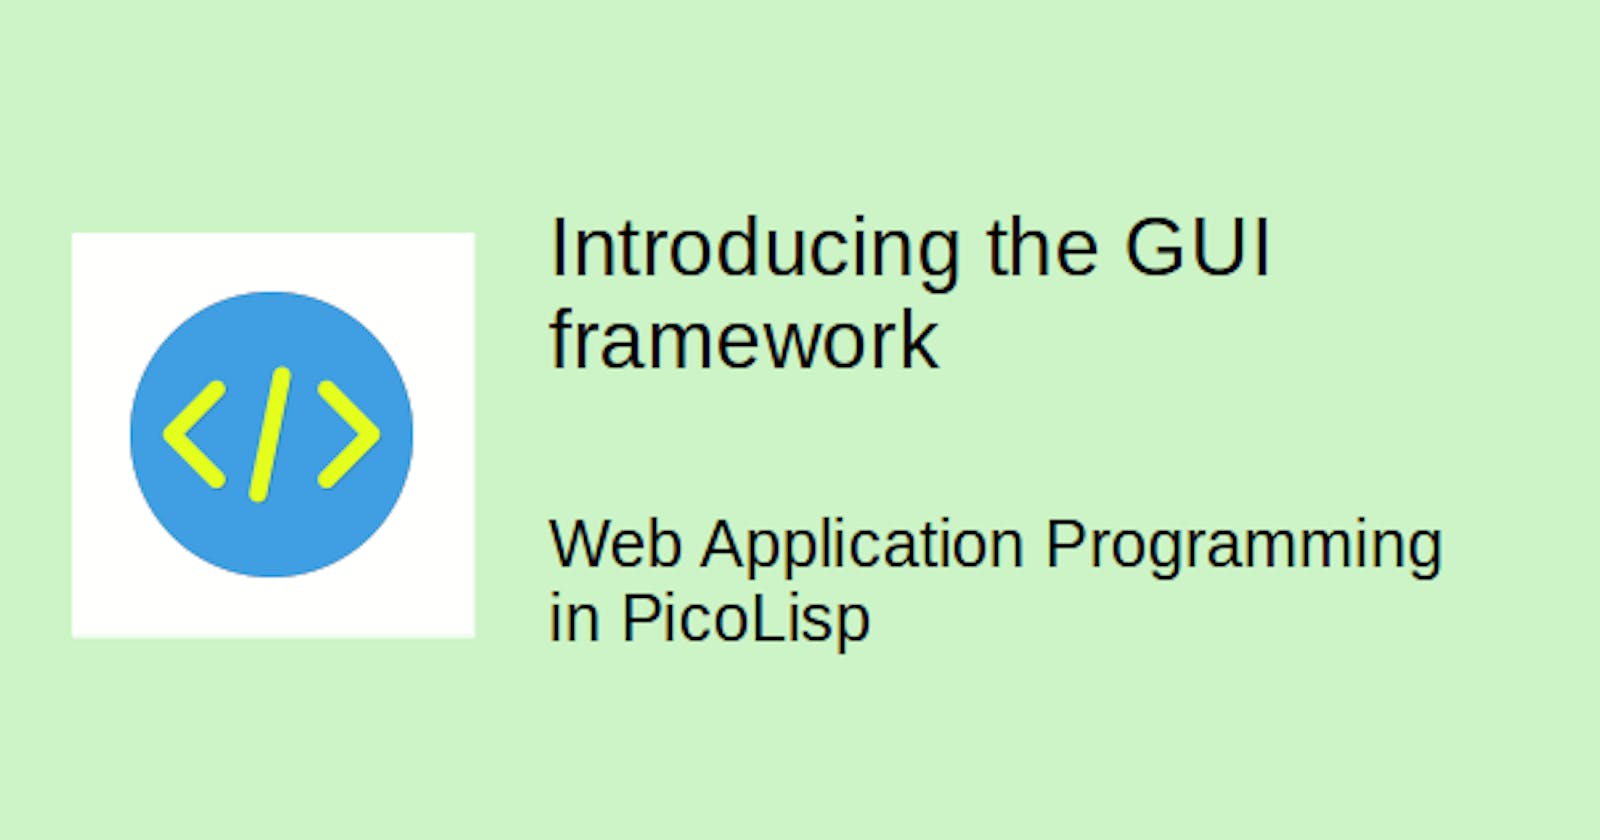 Web Application Programming in PicoLisp: Introducing the GUI framework